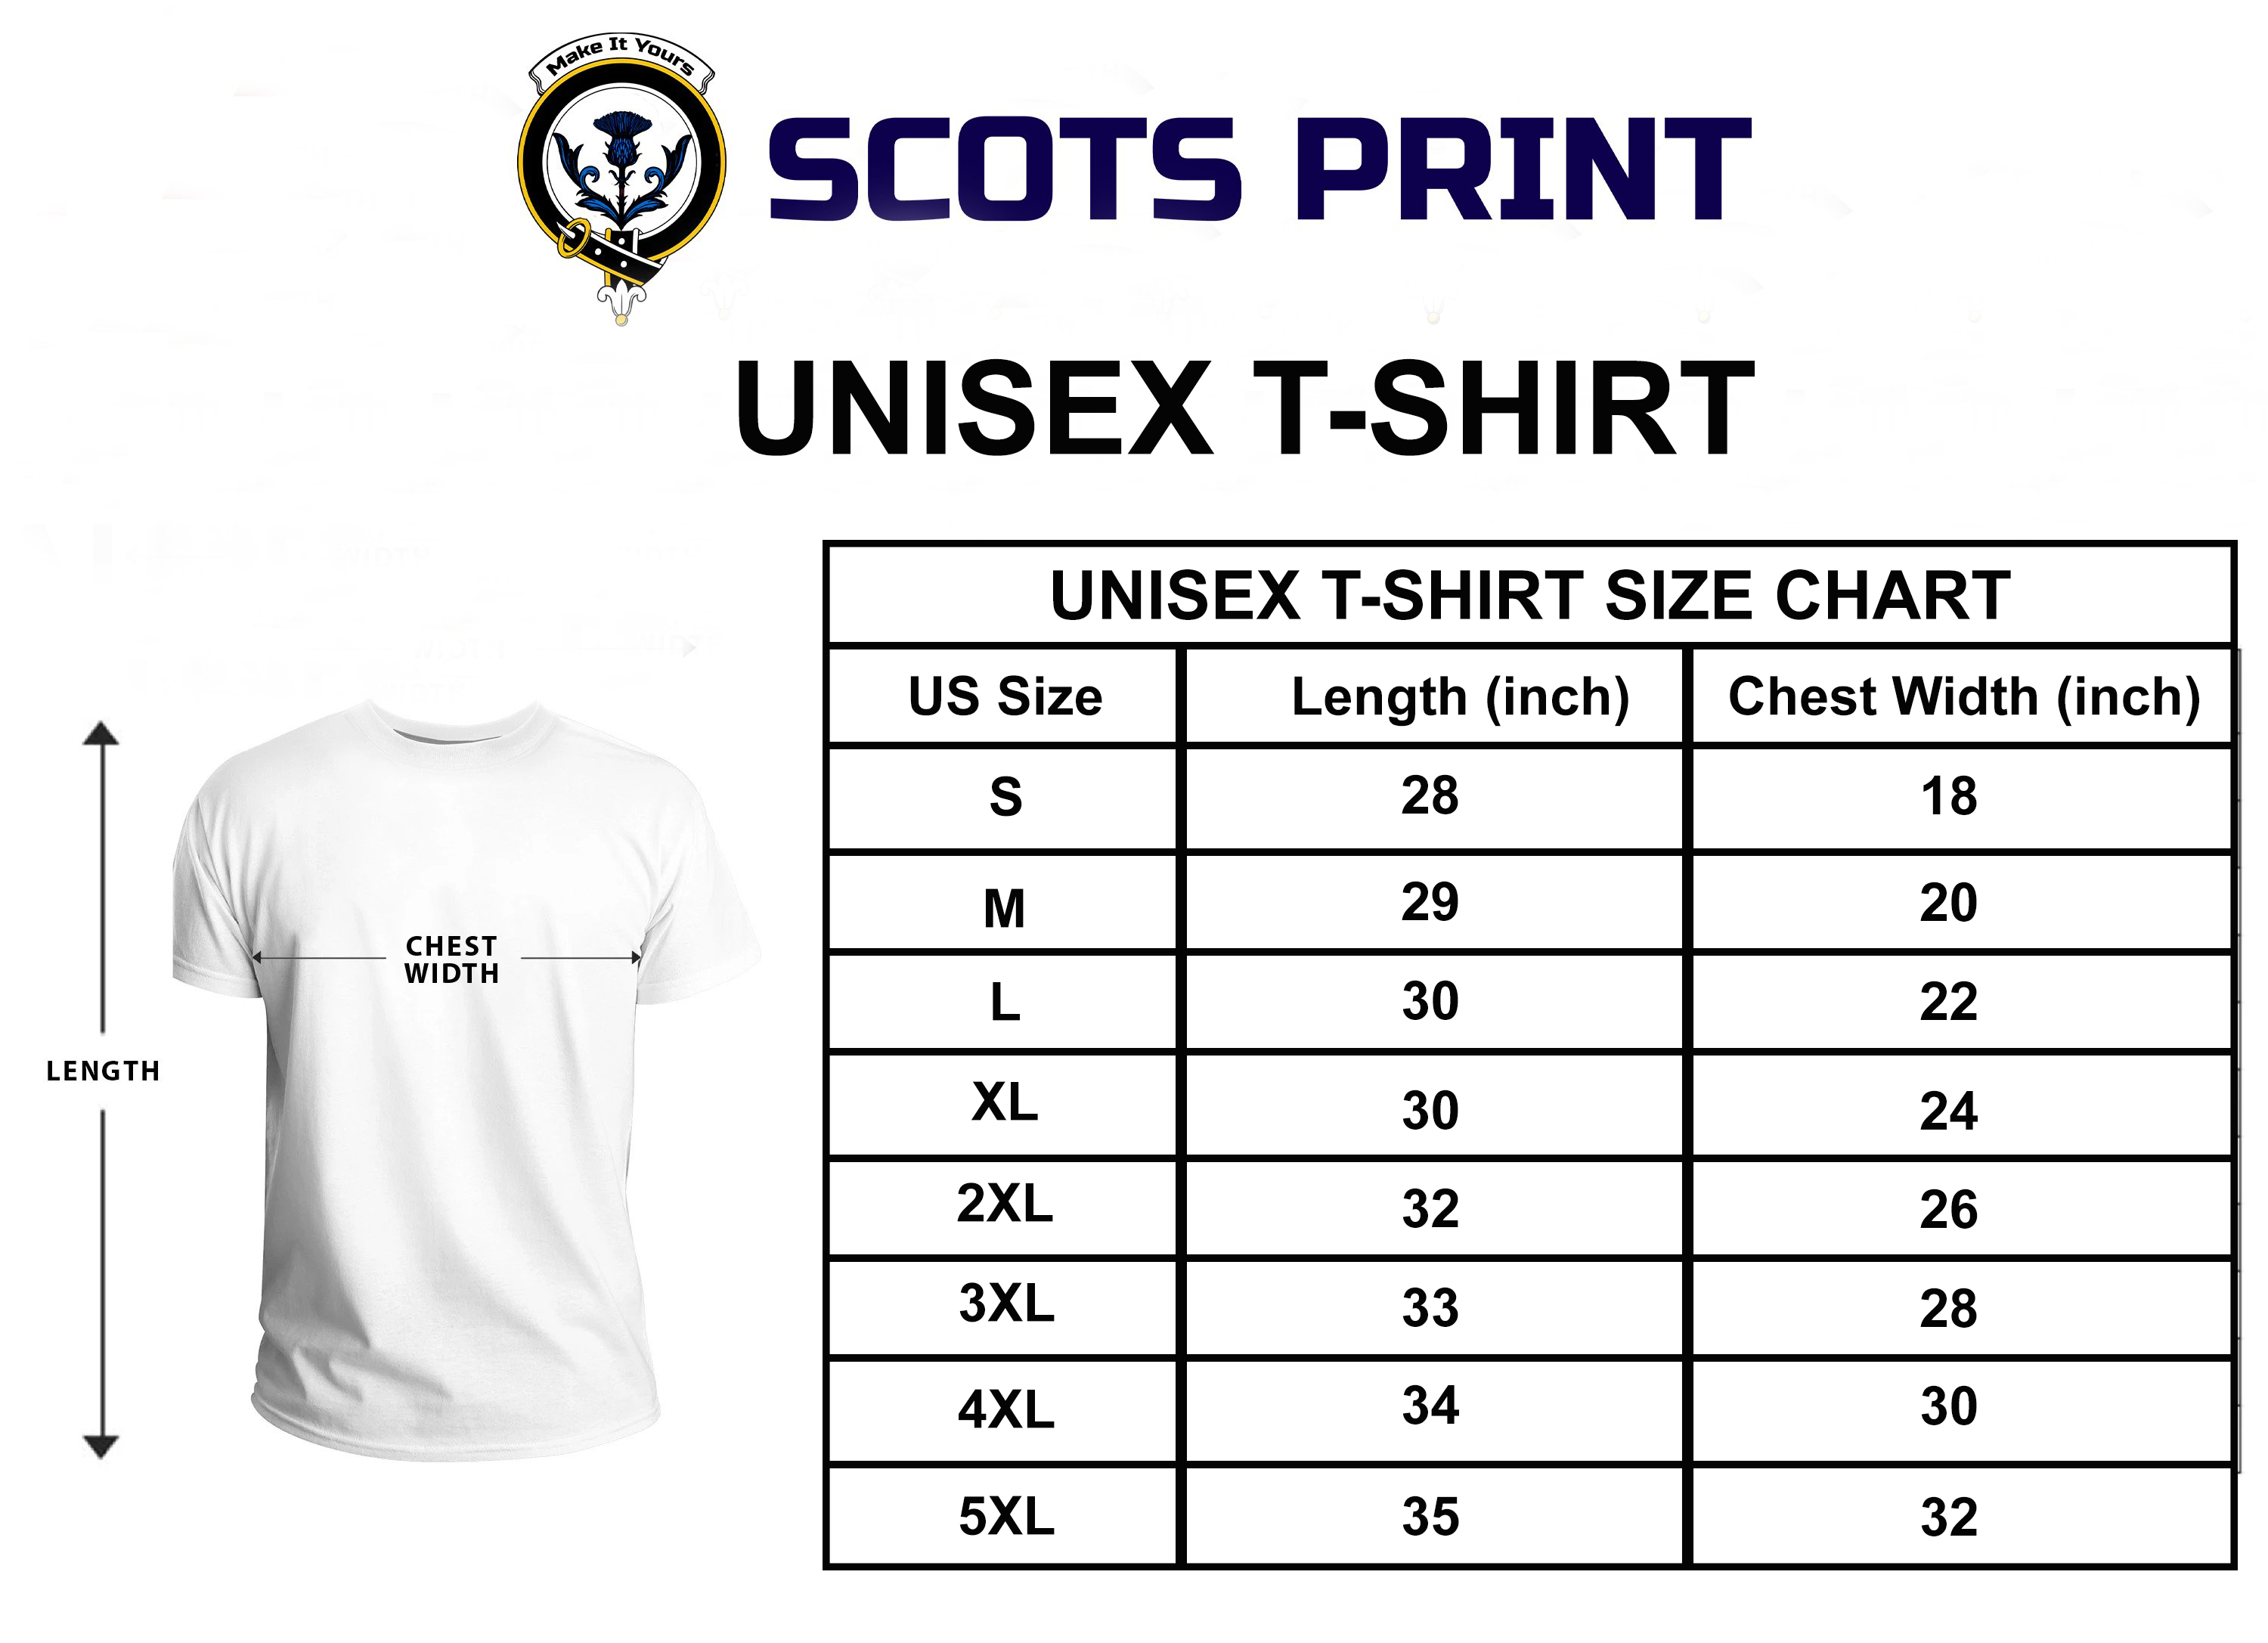 Scott Tartan Crest T-shirt - I'm not yelling style